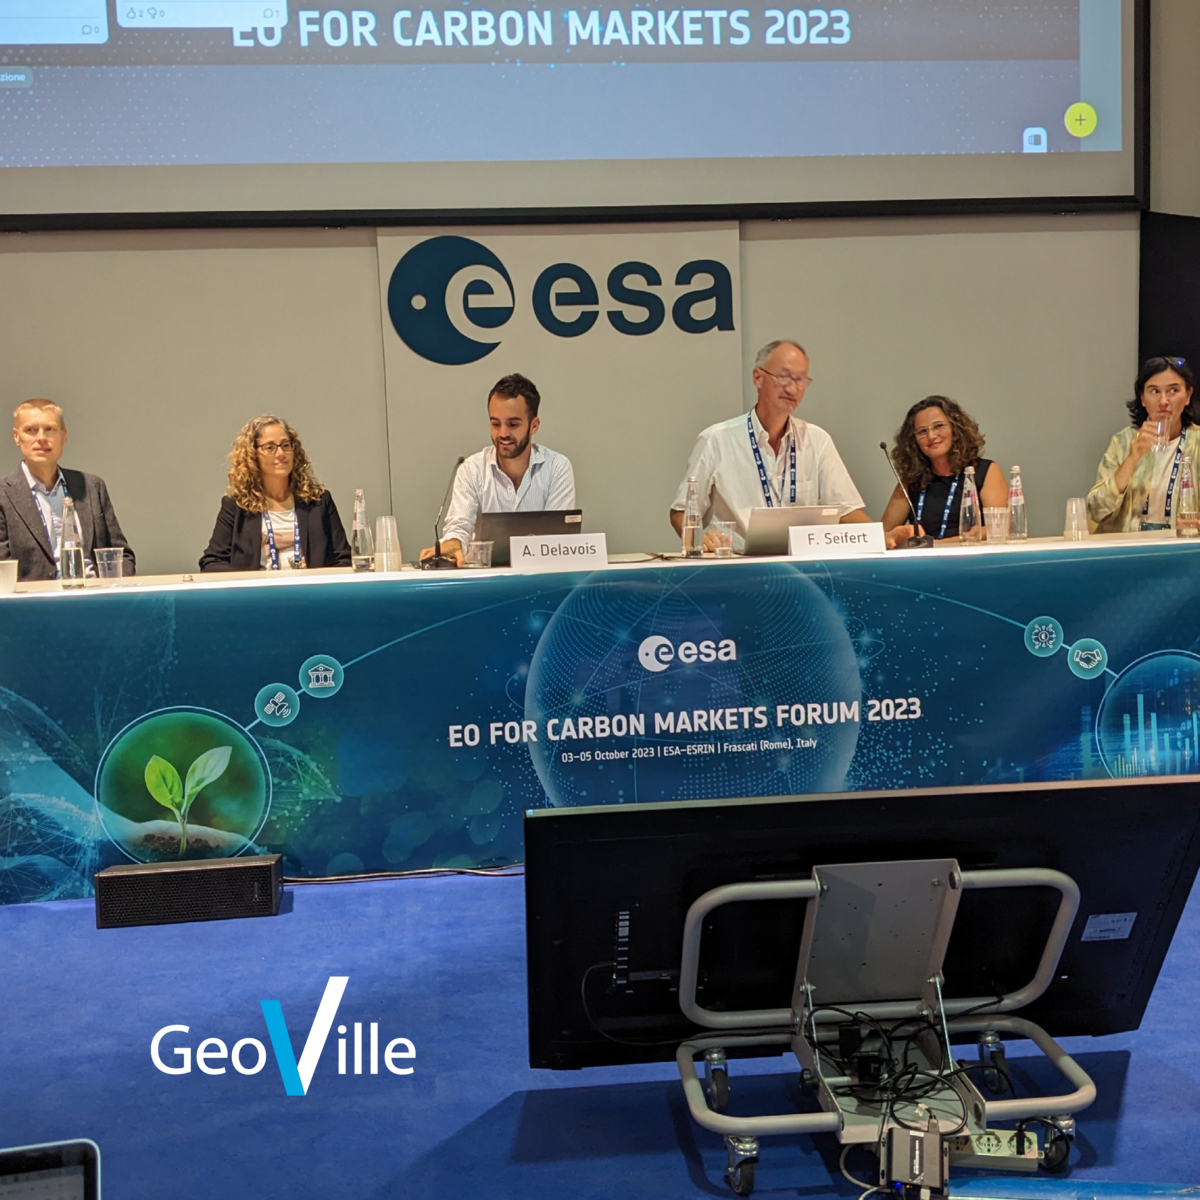 EO for Carbon Market Forum ESA/ESRIN Frascati, Italy 03 to 05 October 2023